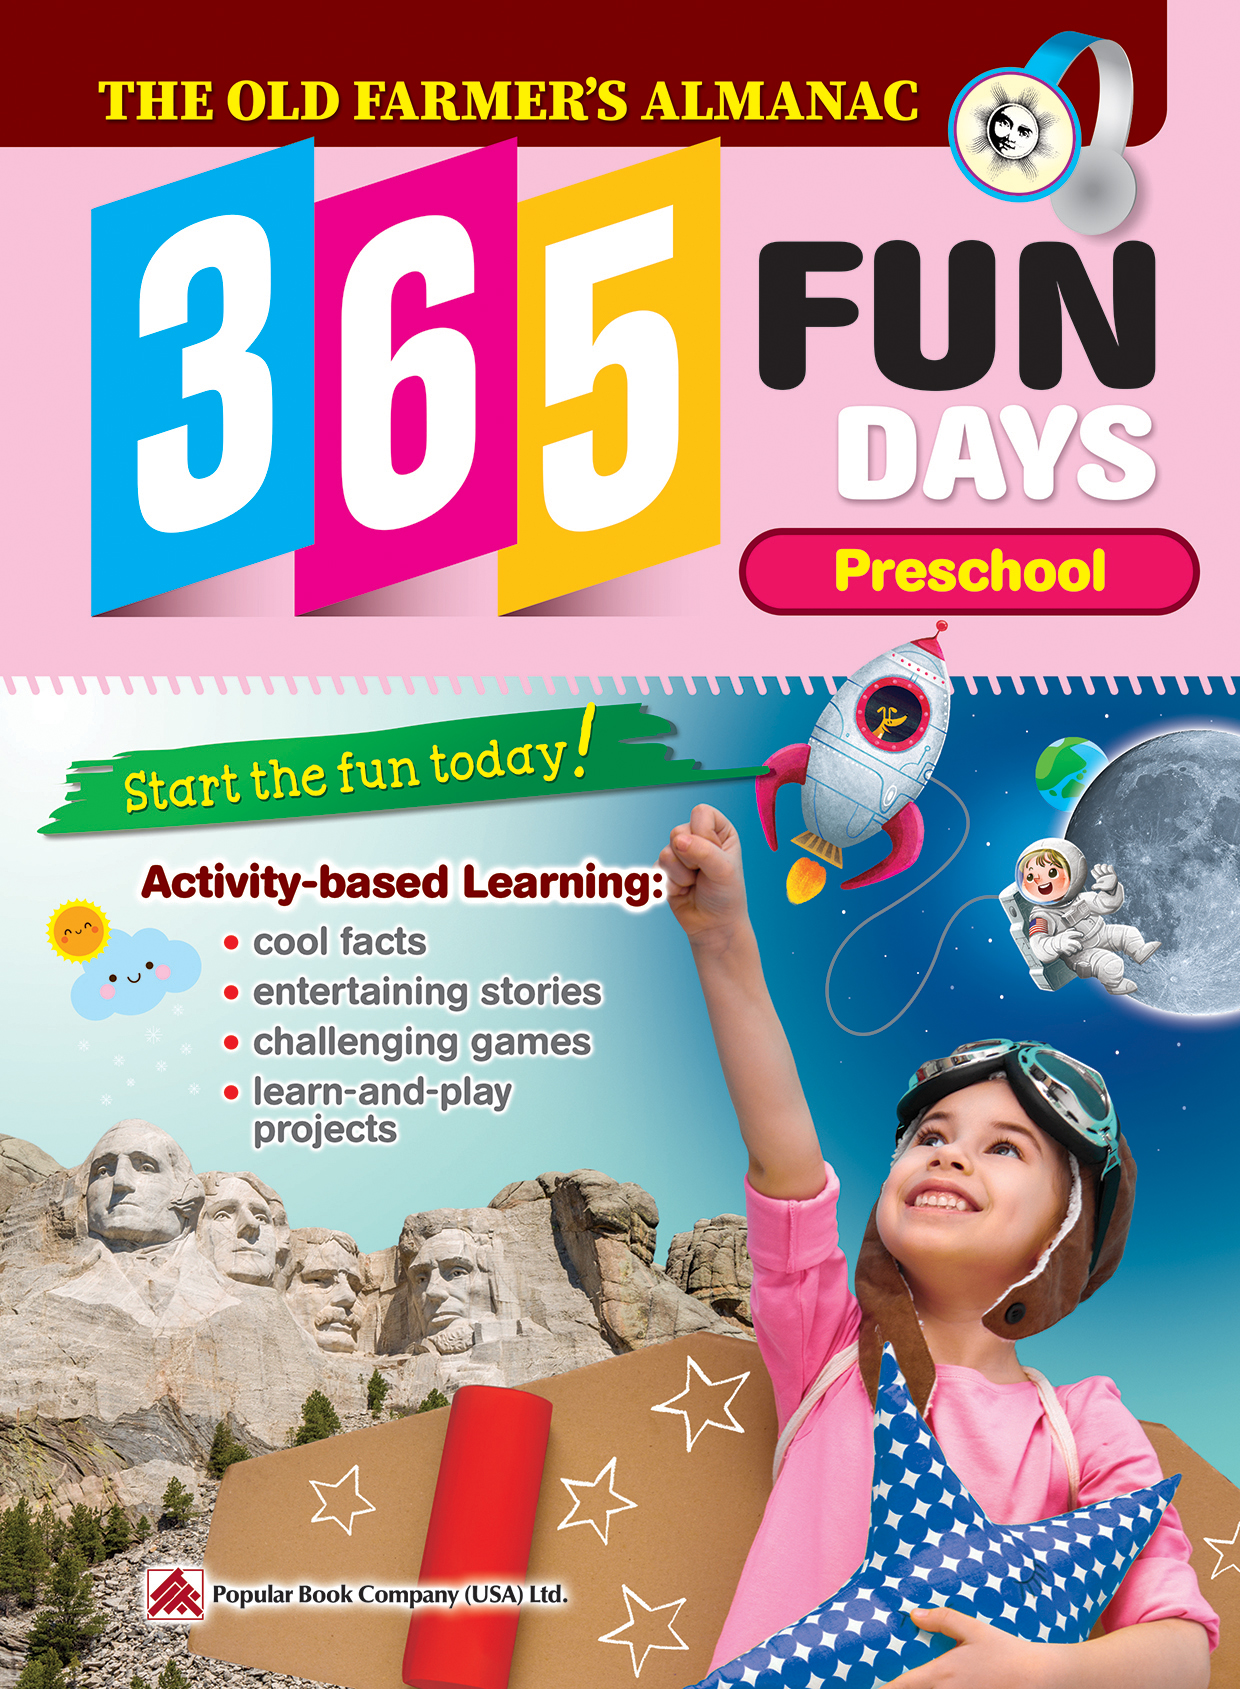 365 Fun Days Preschool